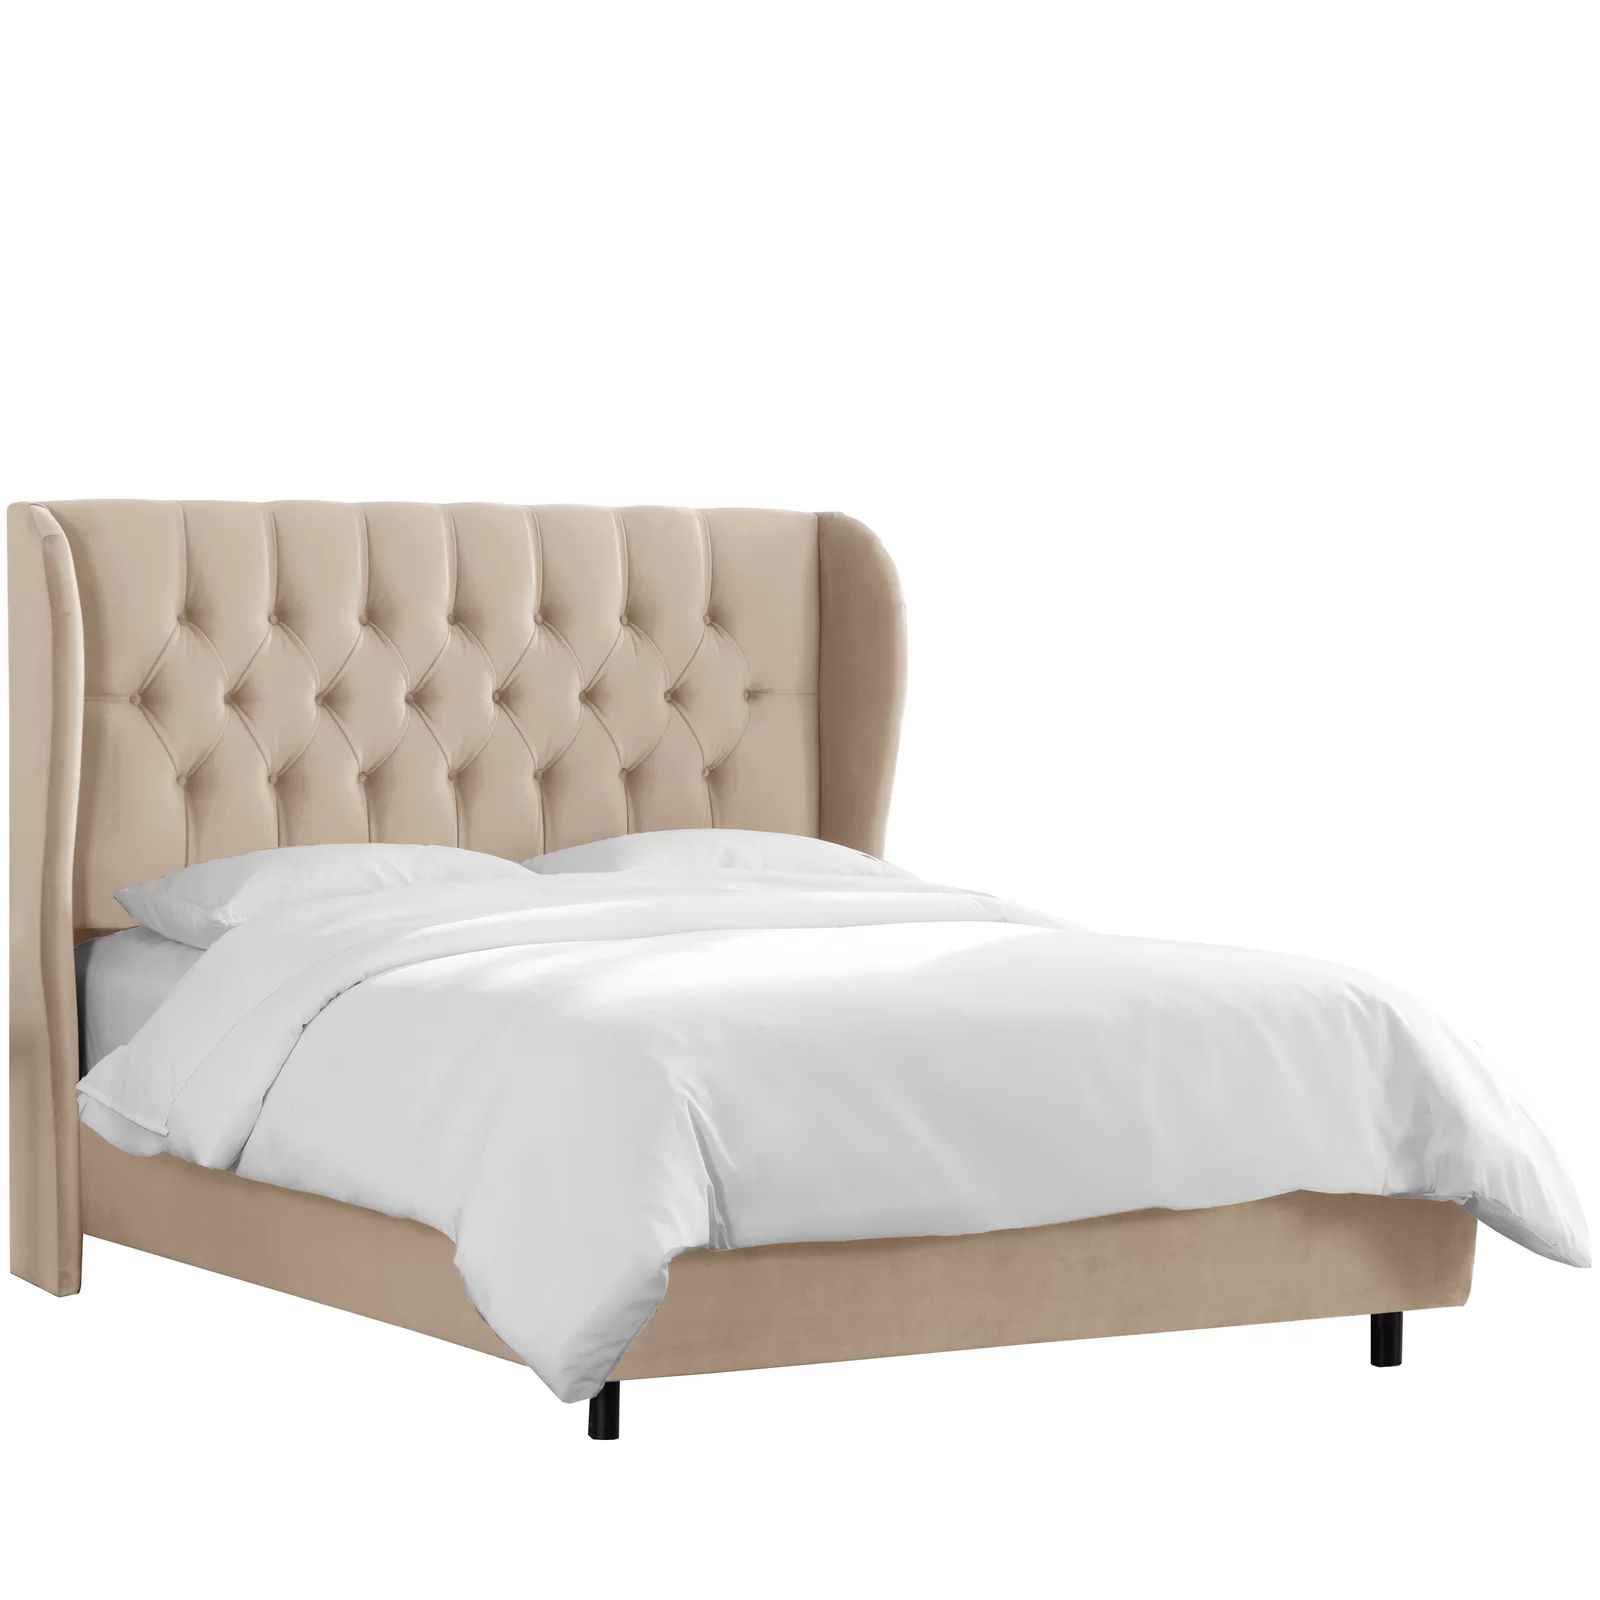 Knaresborough Tufted Upholstered Low Profile Standard Bed | Wayfair Professional